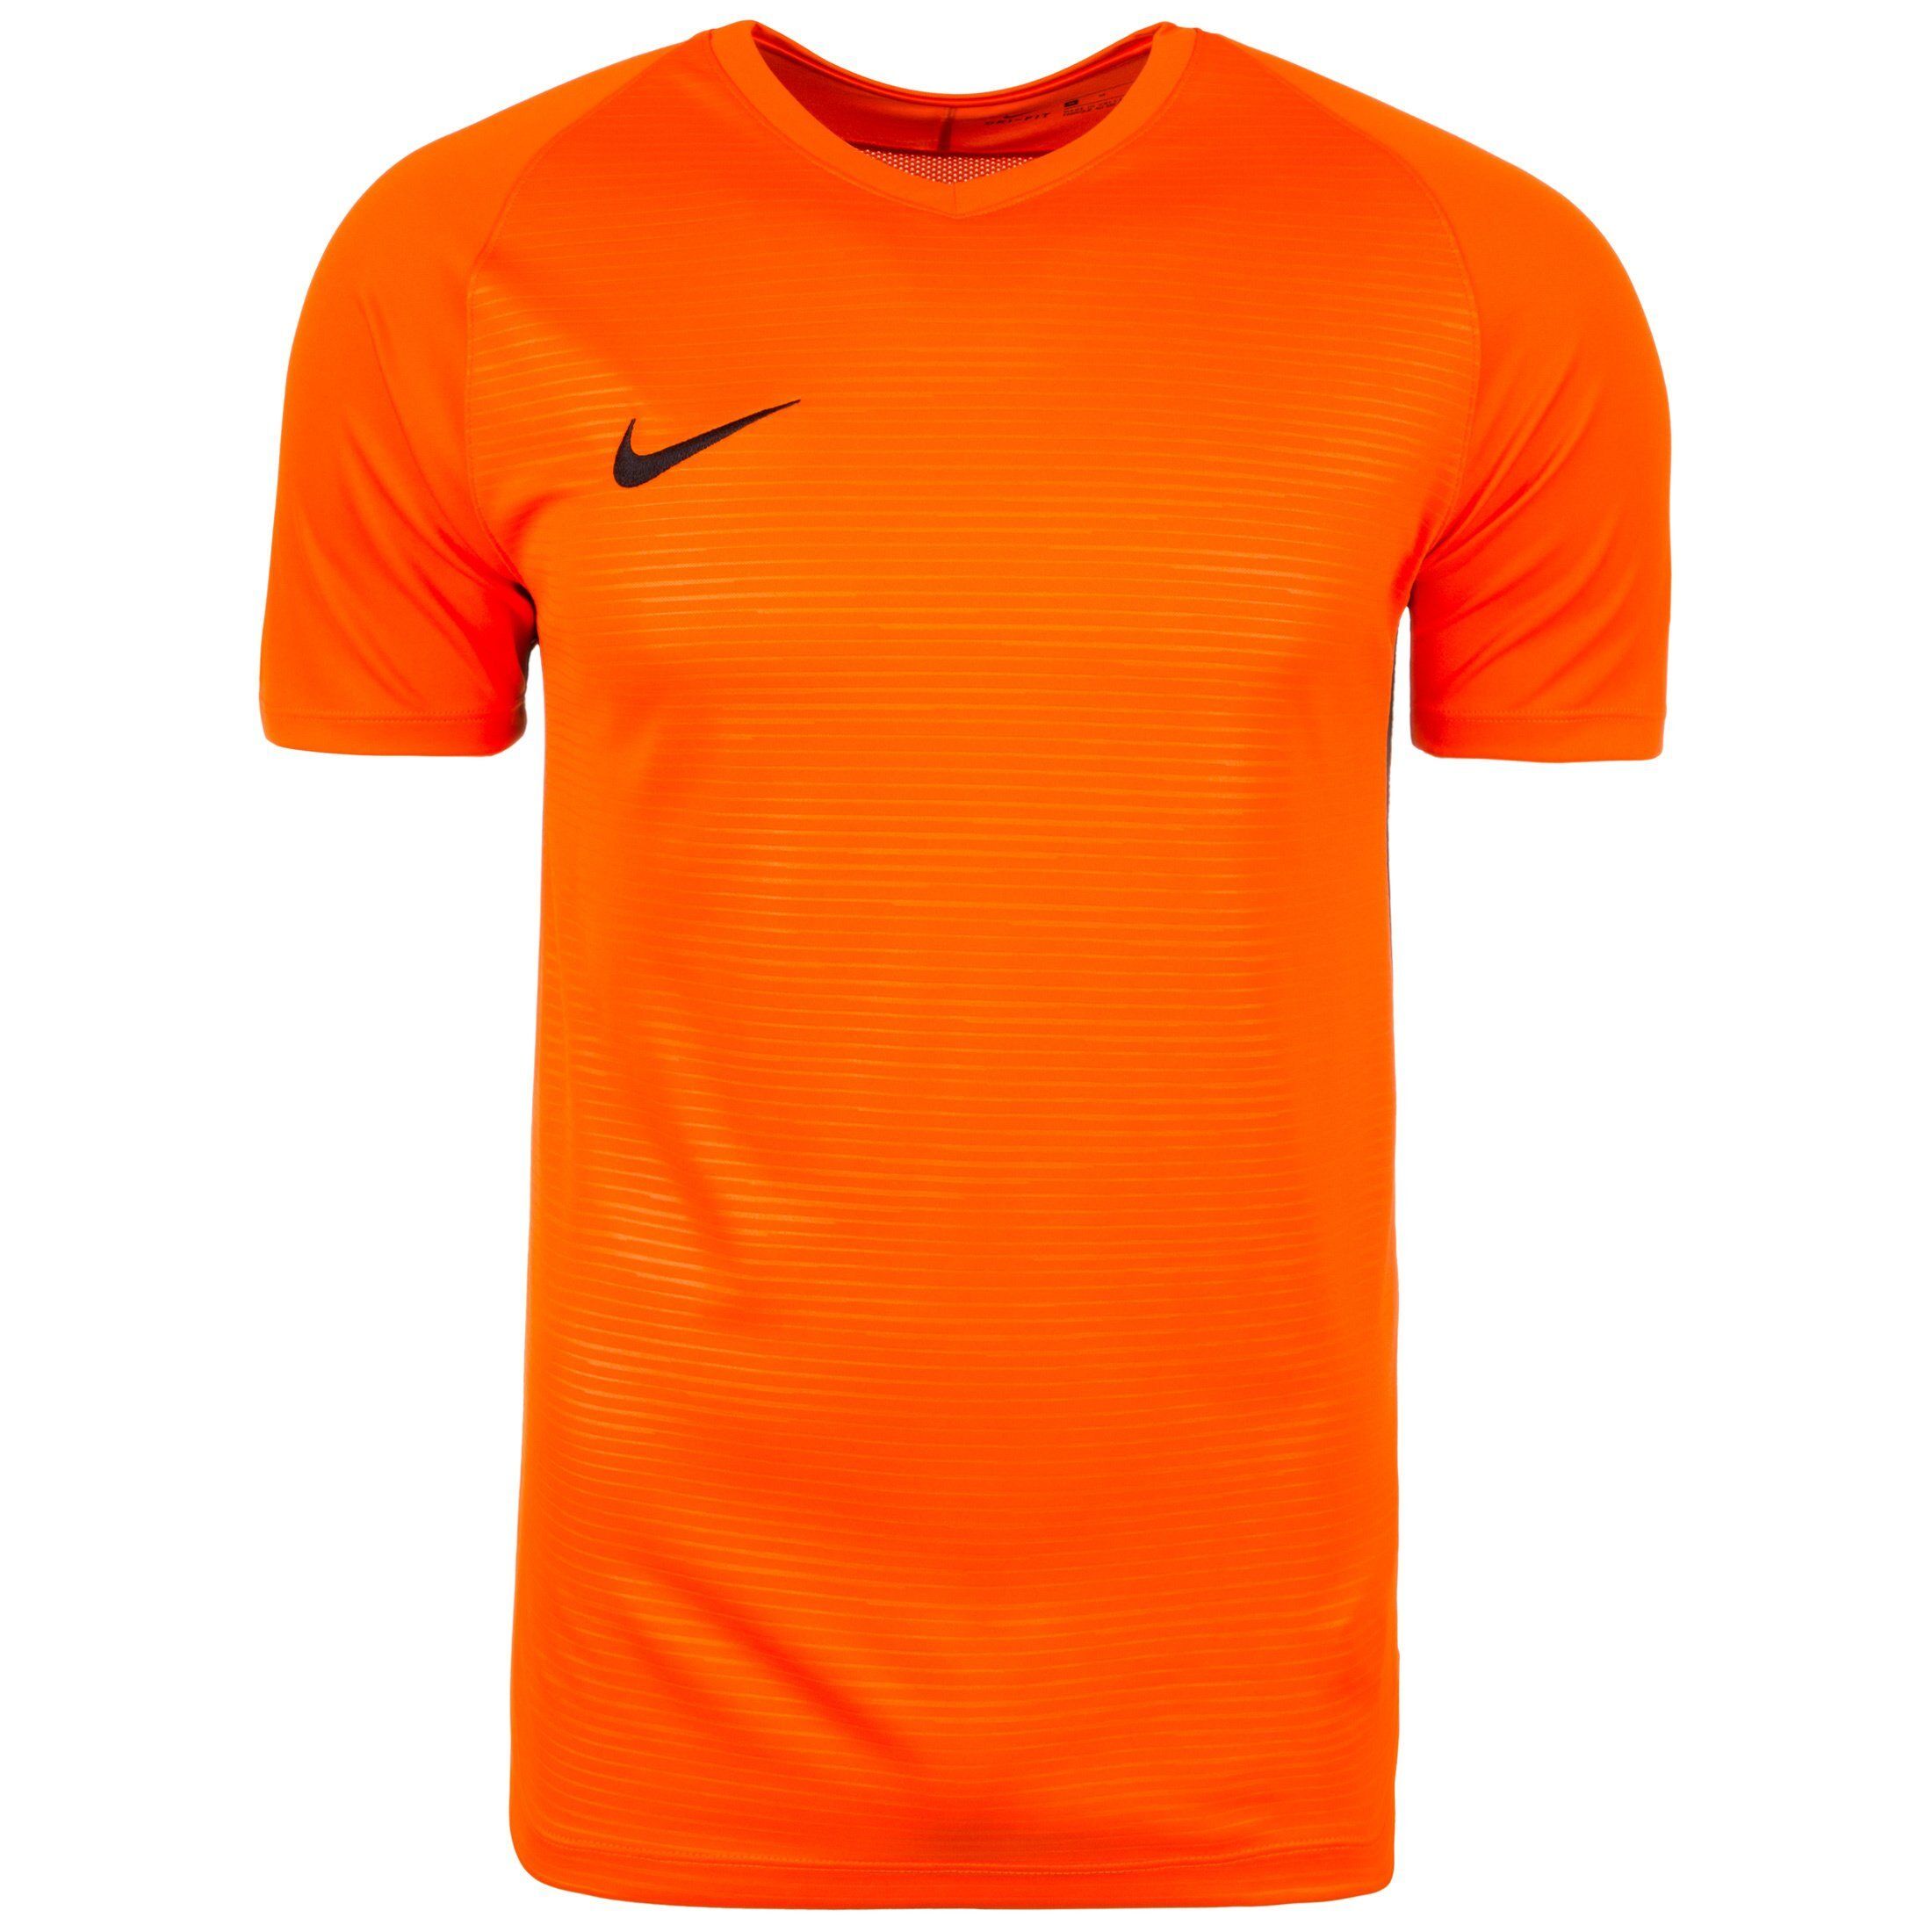 Nike Trikot »Dry Tiempo Premier«, orange-schwarz